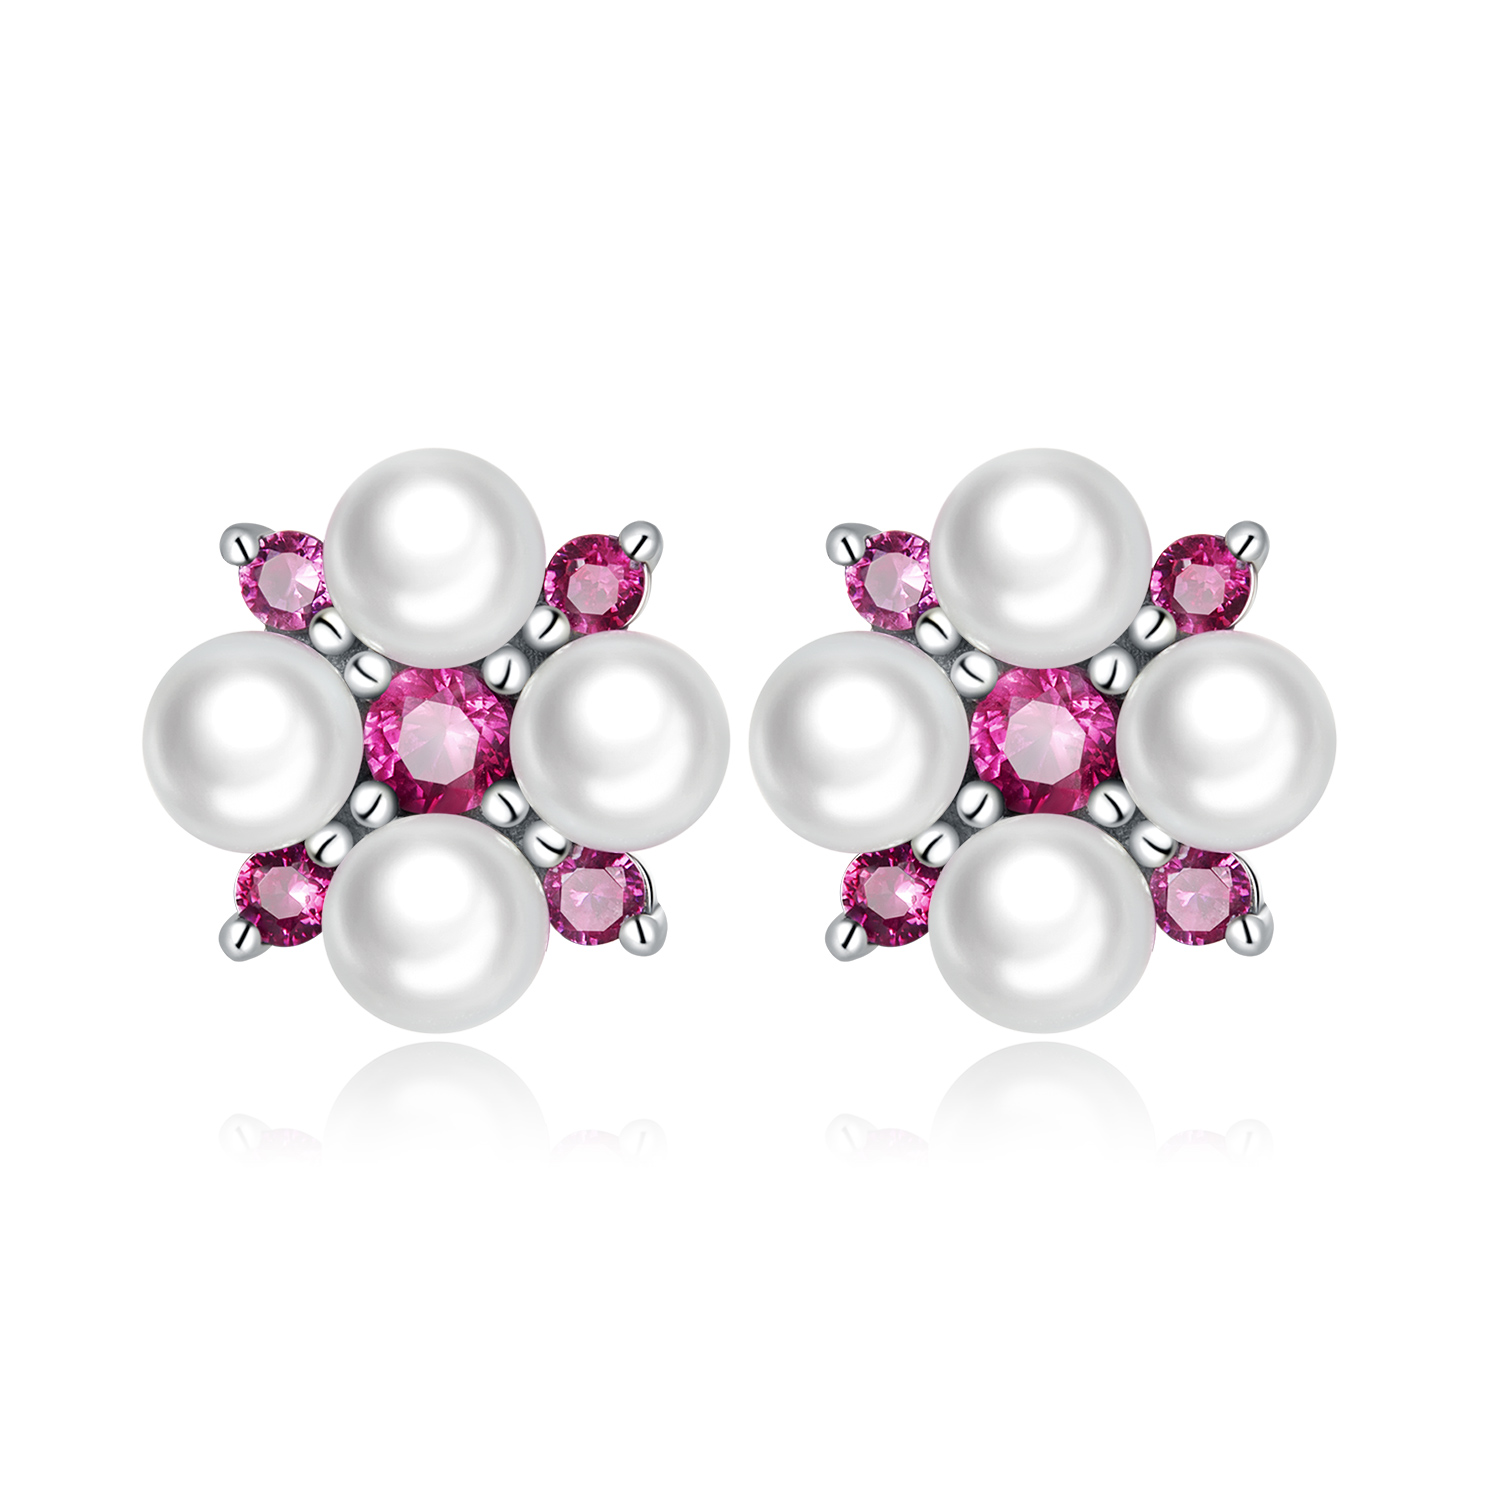 pandora style bead flower stud earrings sce1429